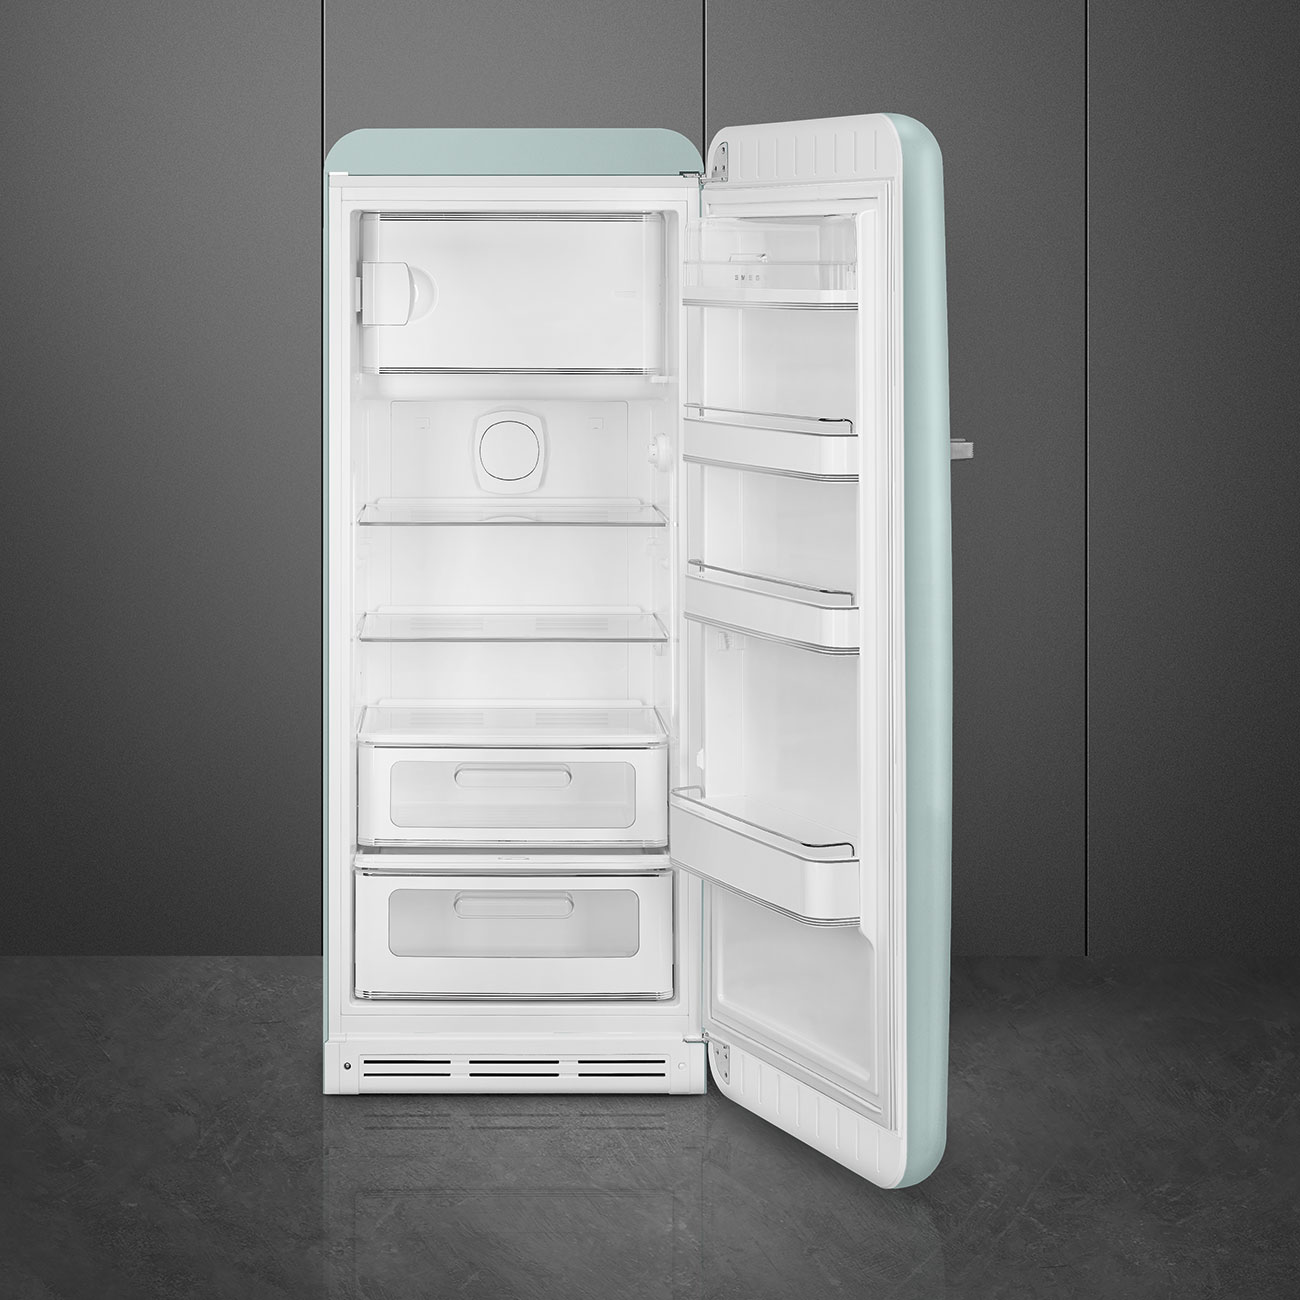 Sea Salt Green refrigerator - Smeg_4